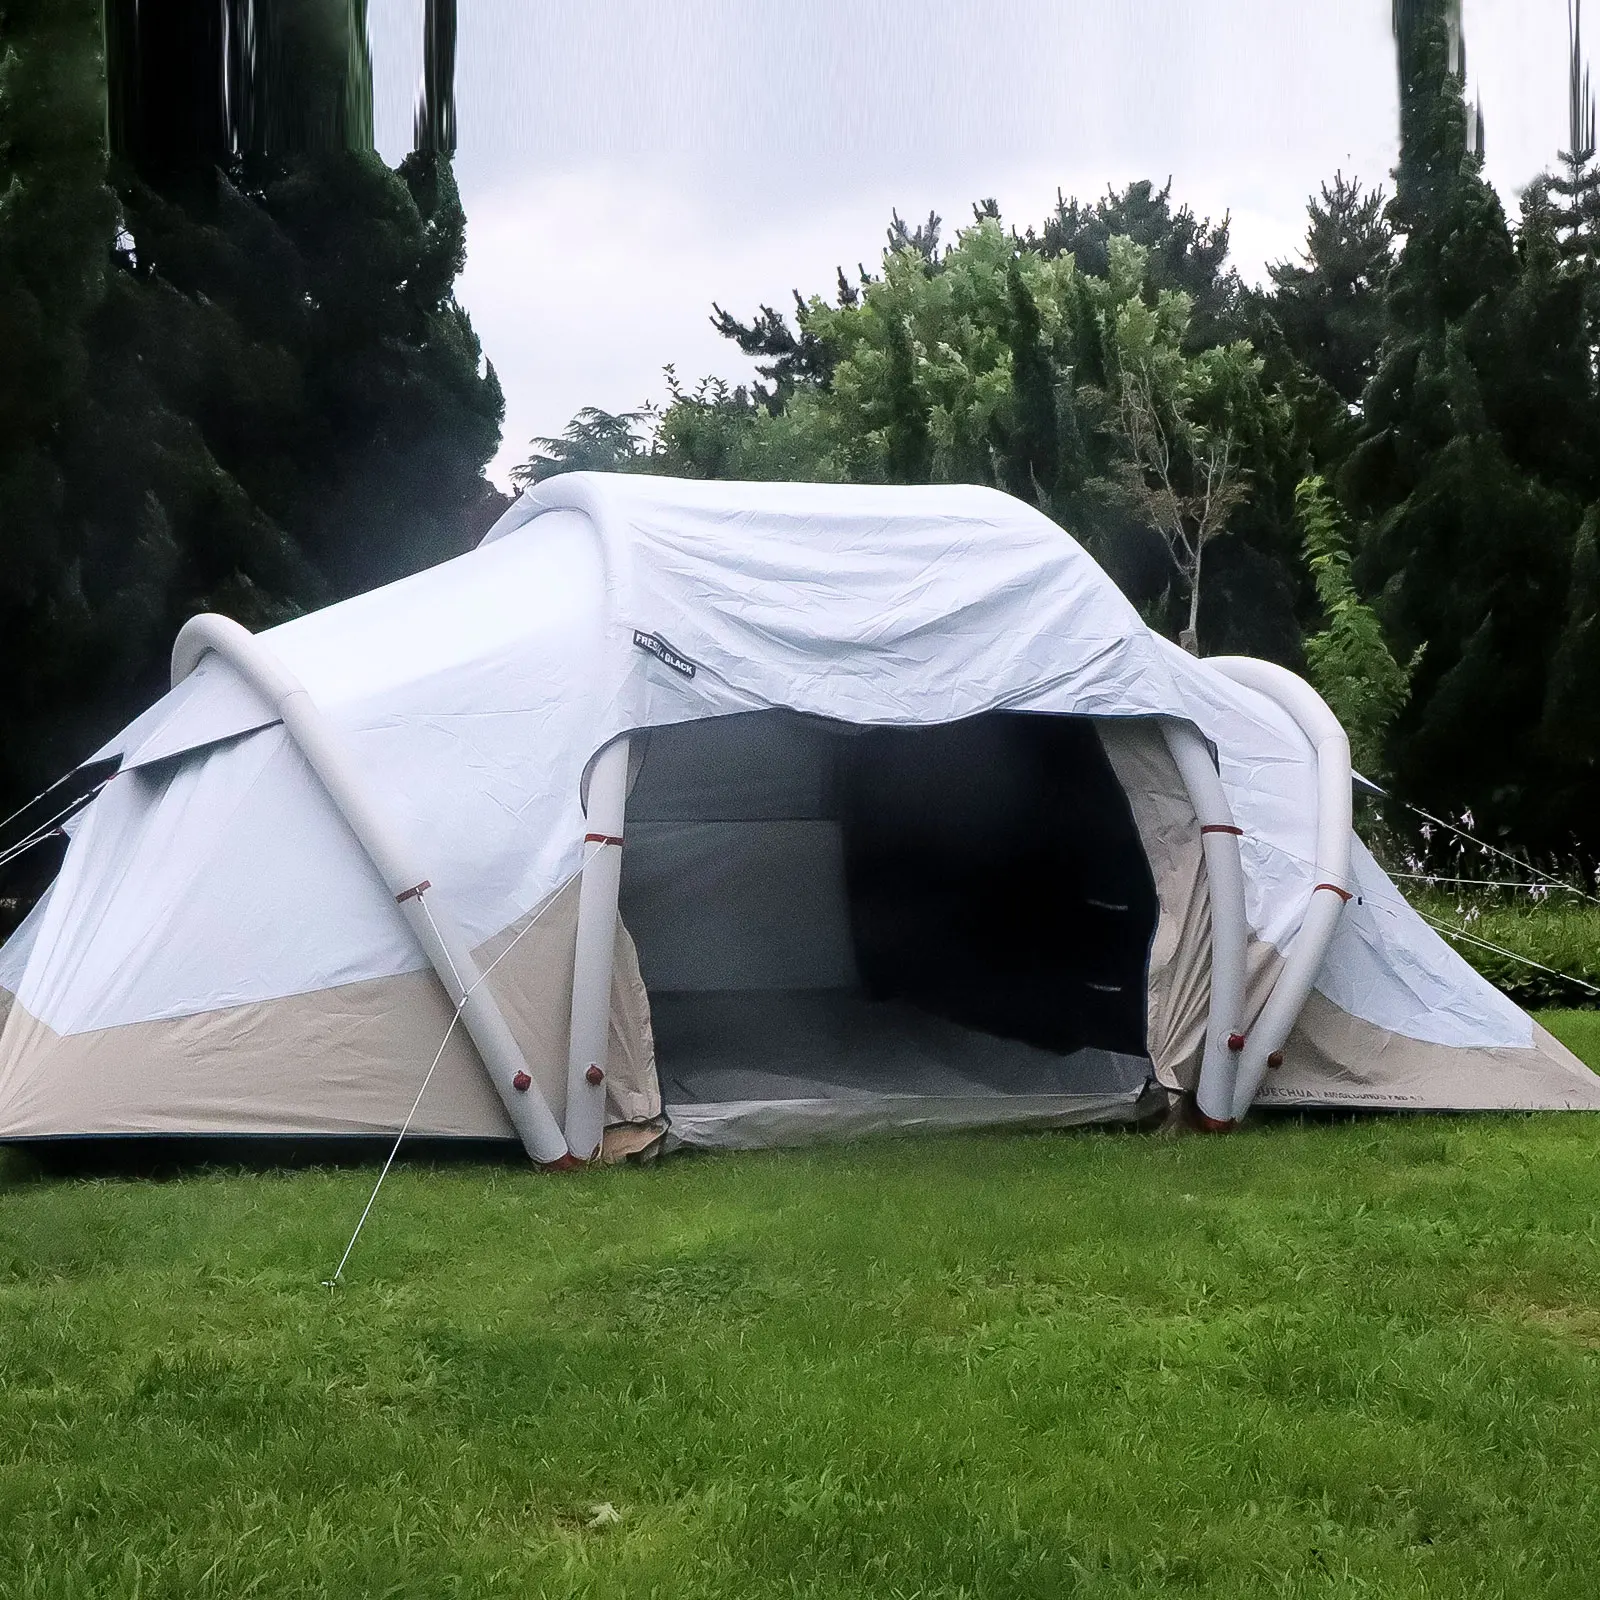 karton Meesterschap Haven Inflatable Party Tents For Events Outdoor Waterproof Outdoor Family Luxury  Big Camping Tent For 4-8 Persons - Buy Luxury Safari Tent For  Sale,Inflatable Camping Tents For Sales,Inflatable Party Dome Tent Product  on